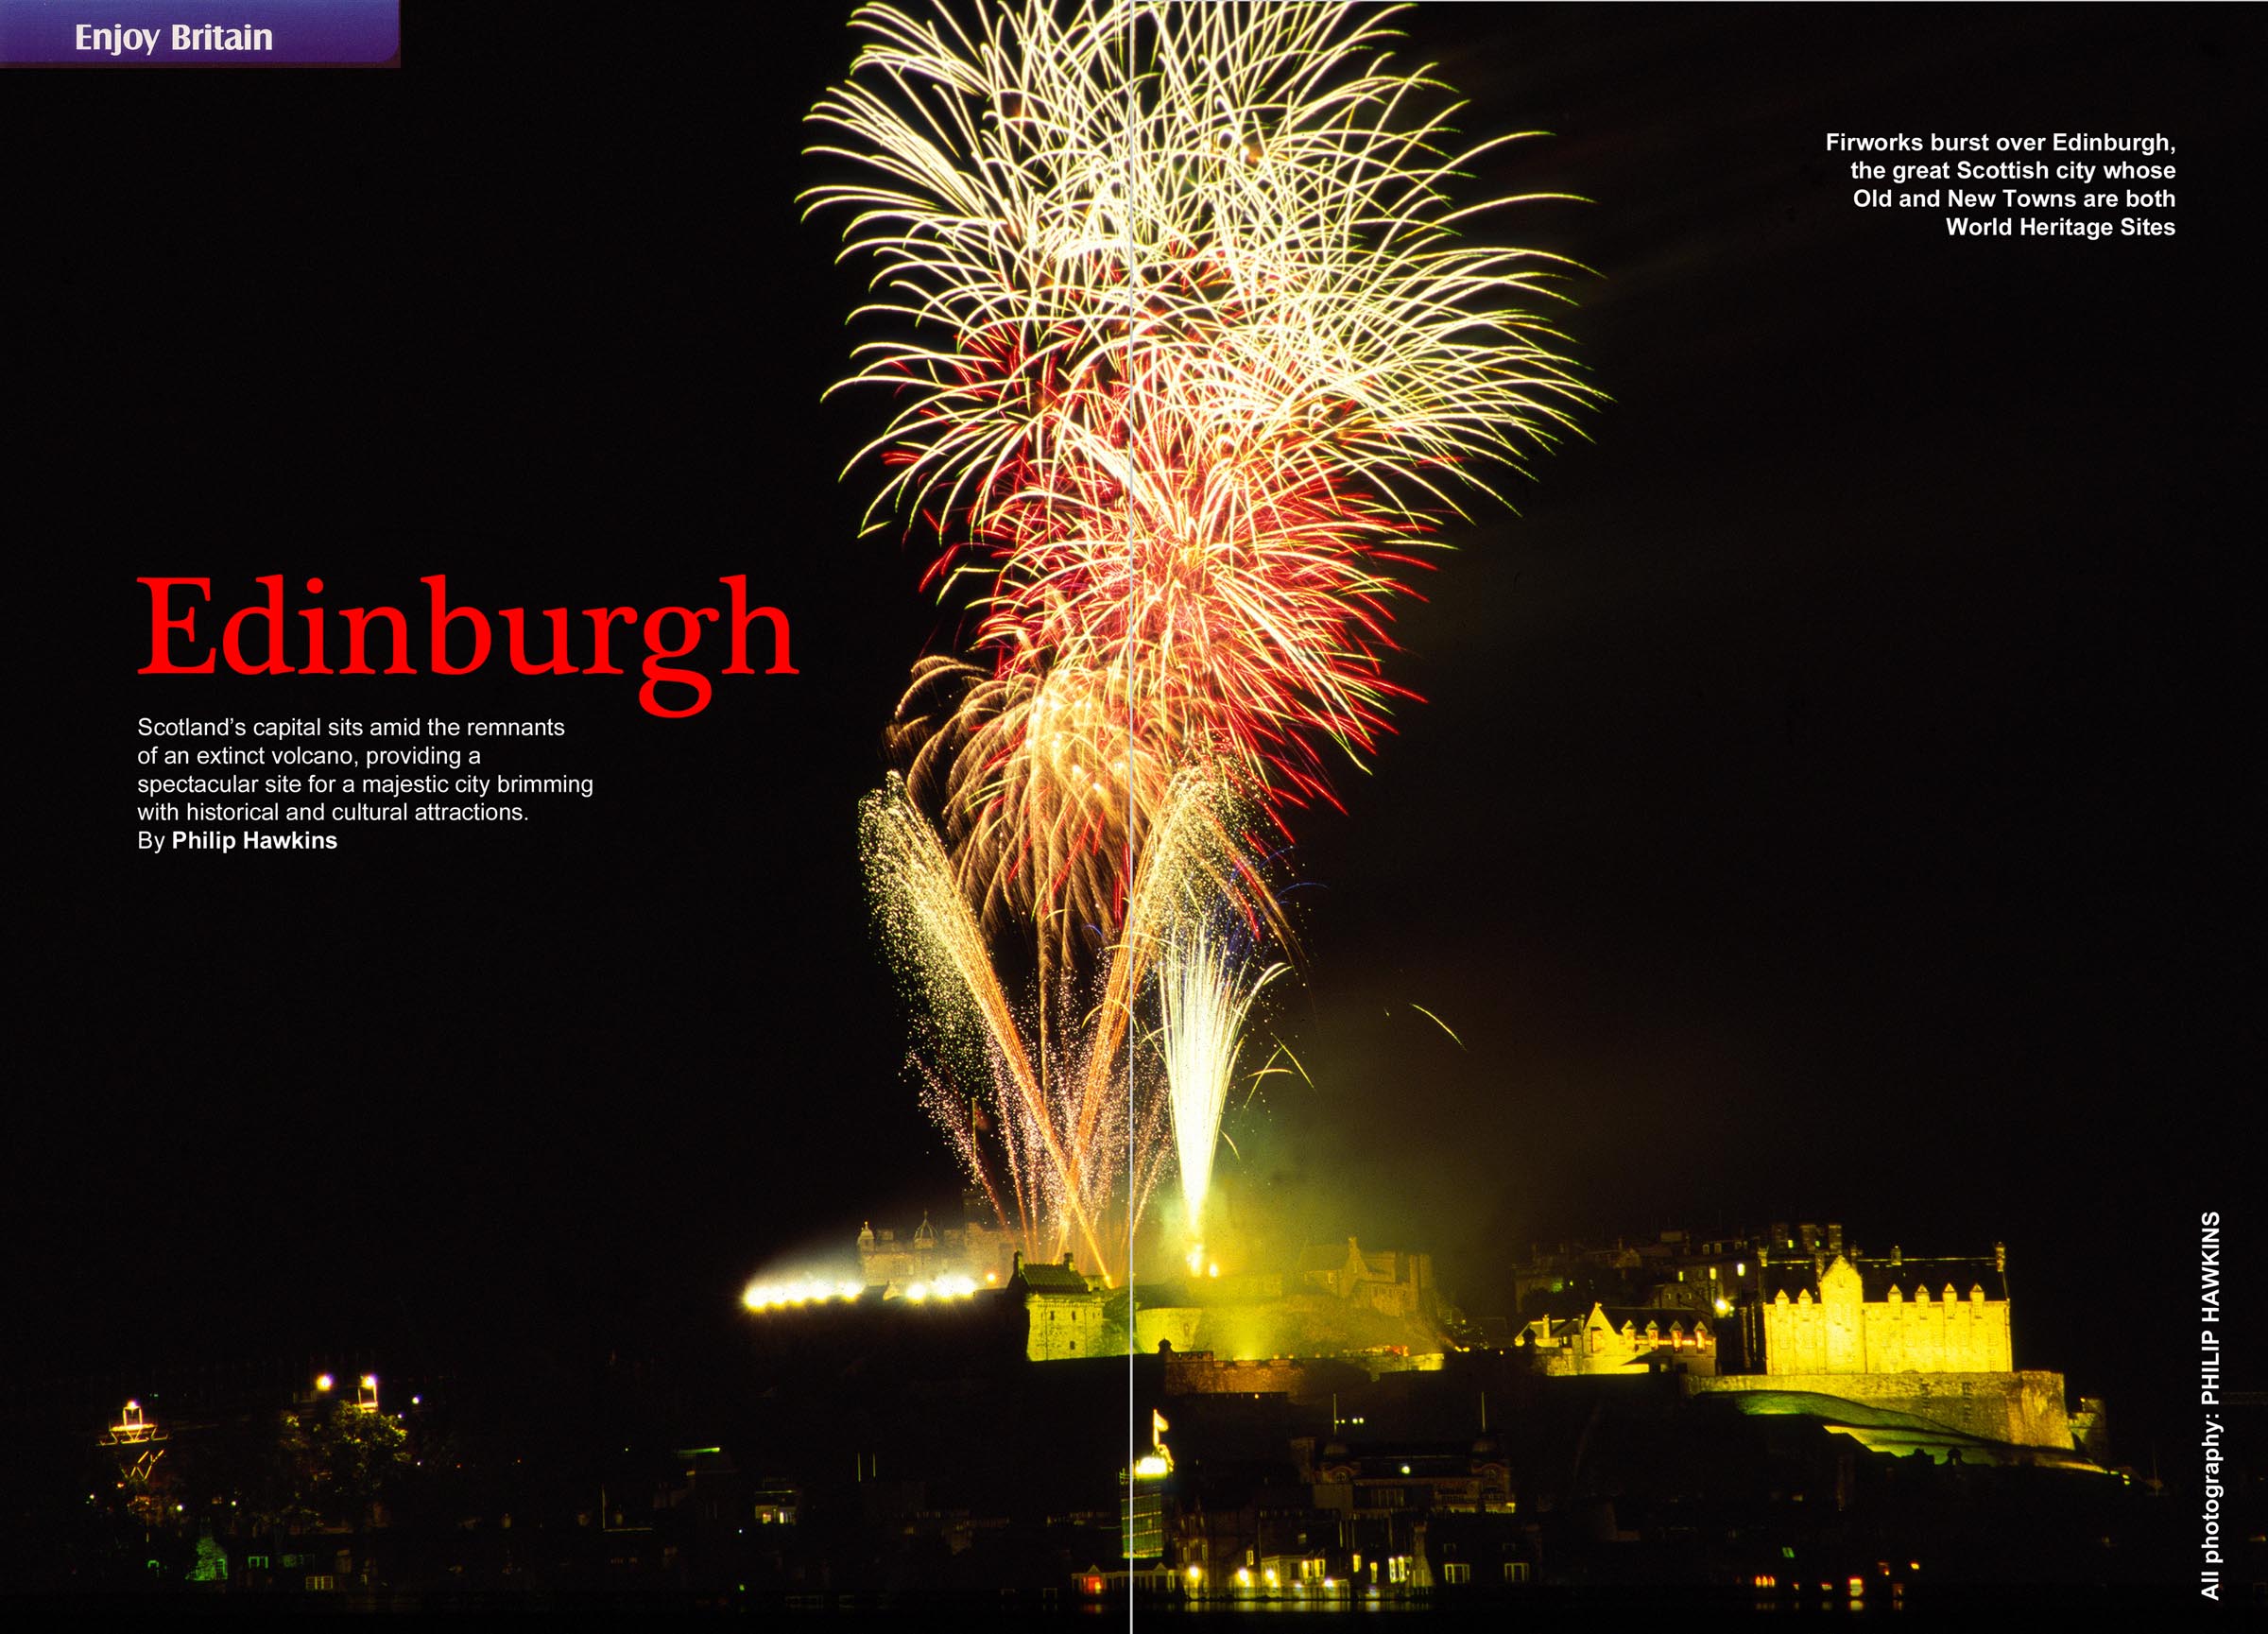 Edinburgh fireworks double page magazine spread